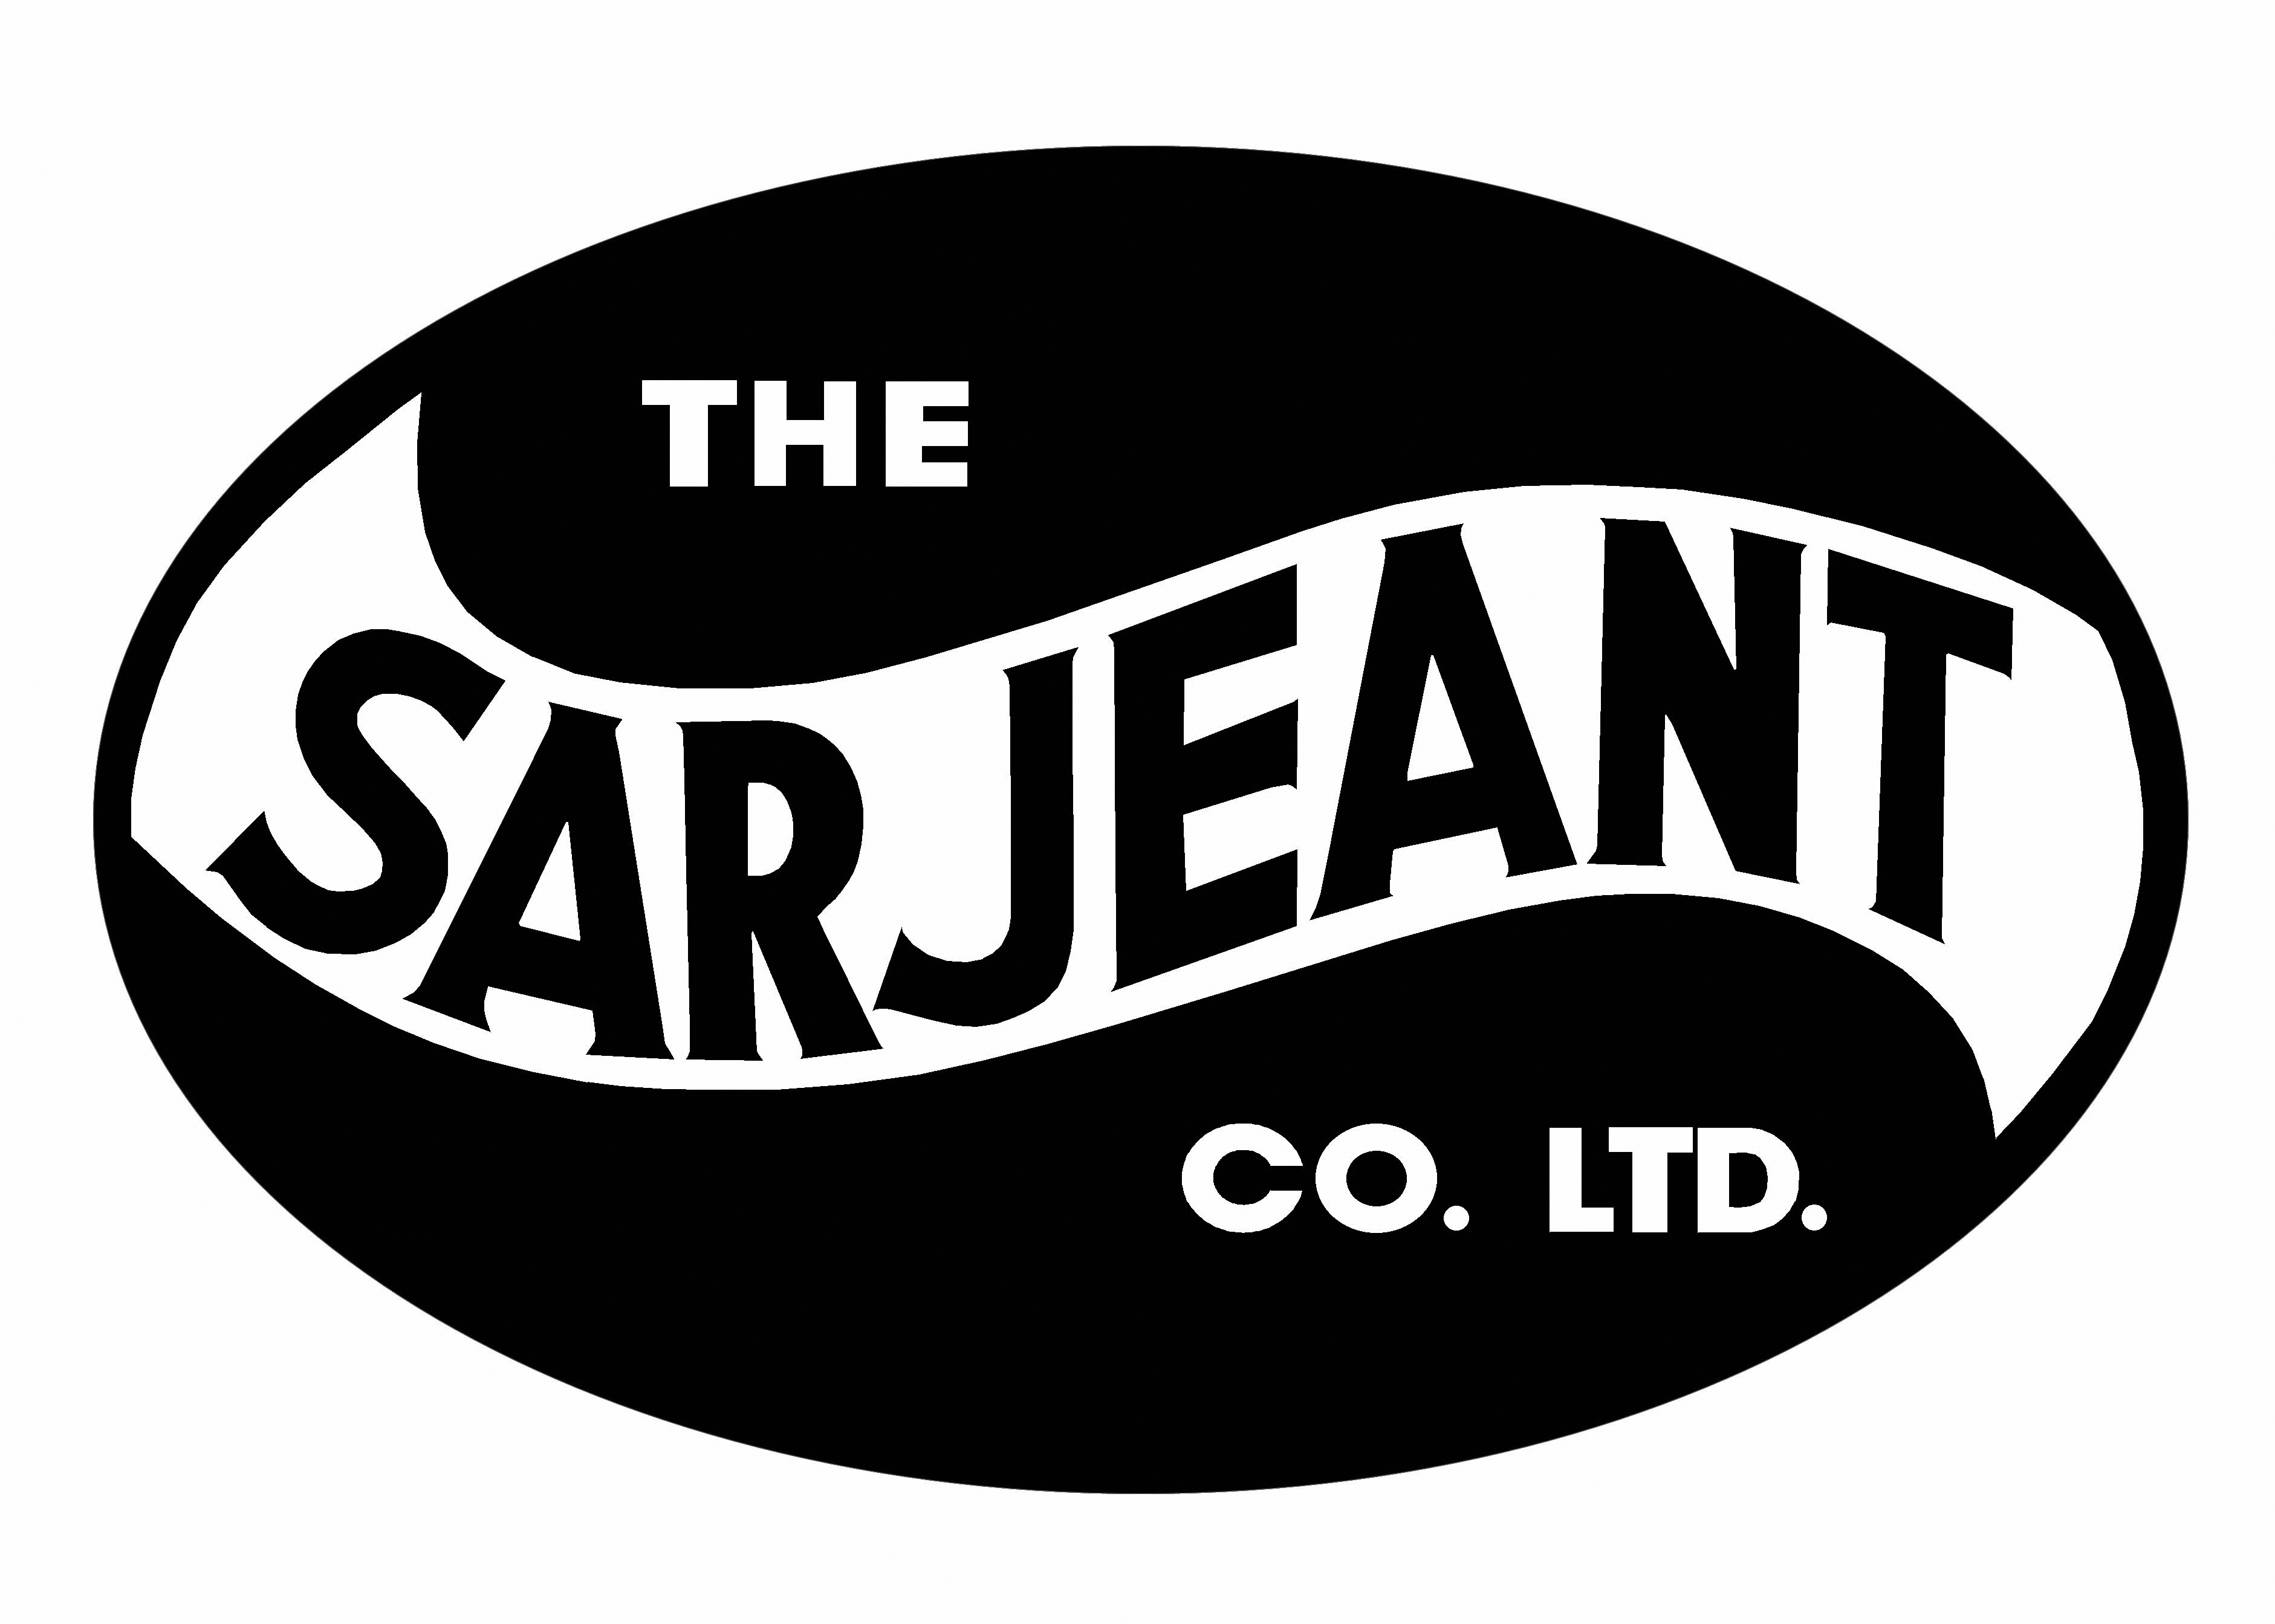 The Sarjeant Company Ltd.